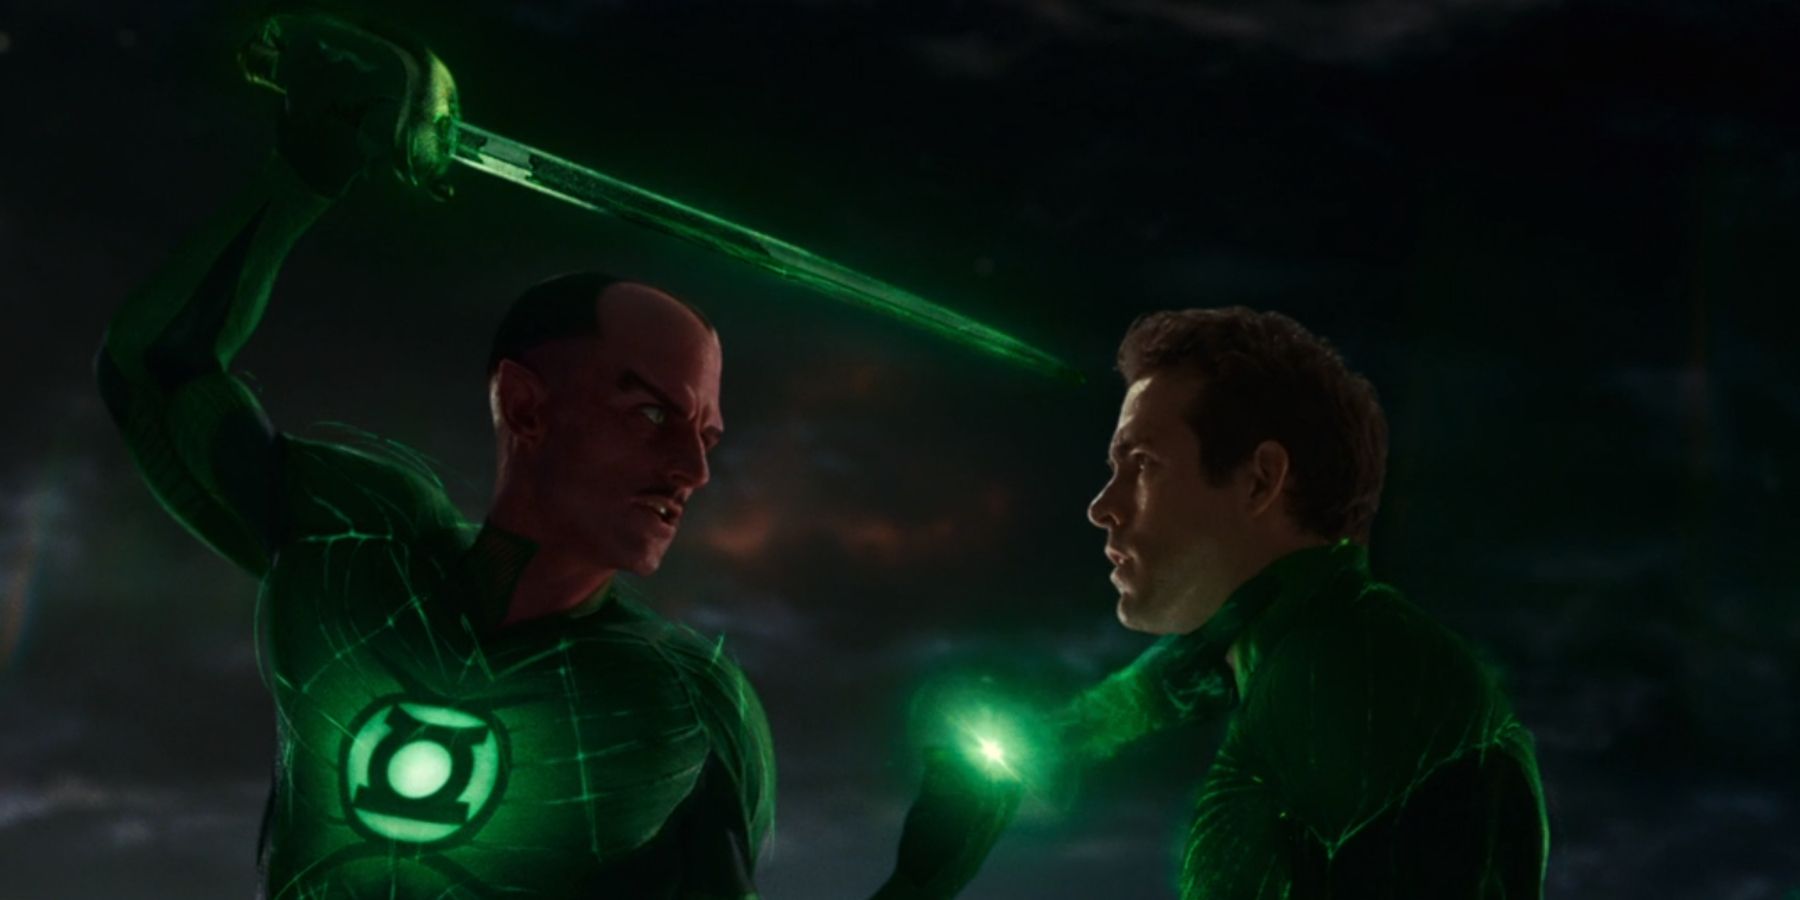 Sinestro sparring with Hal Jordan on Oa in Green Lantern 2011